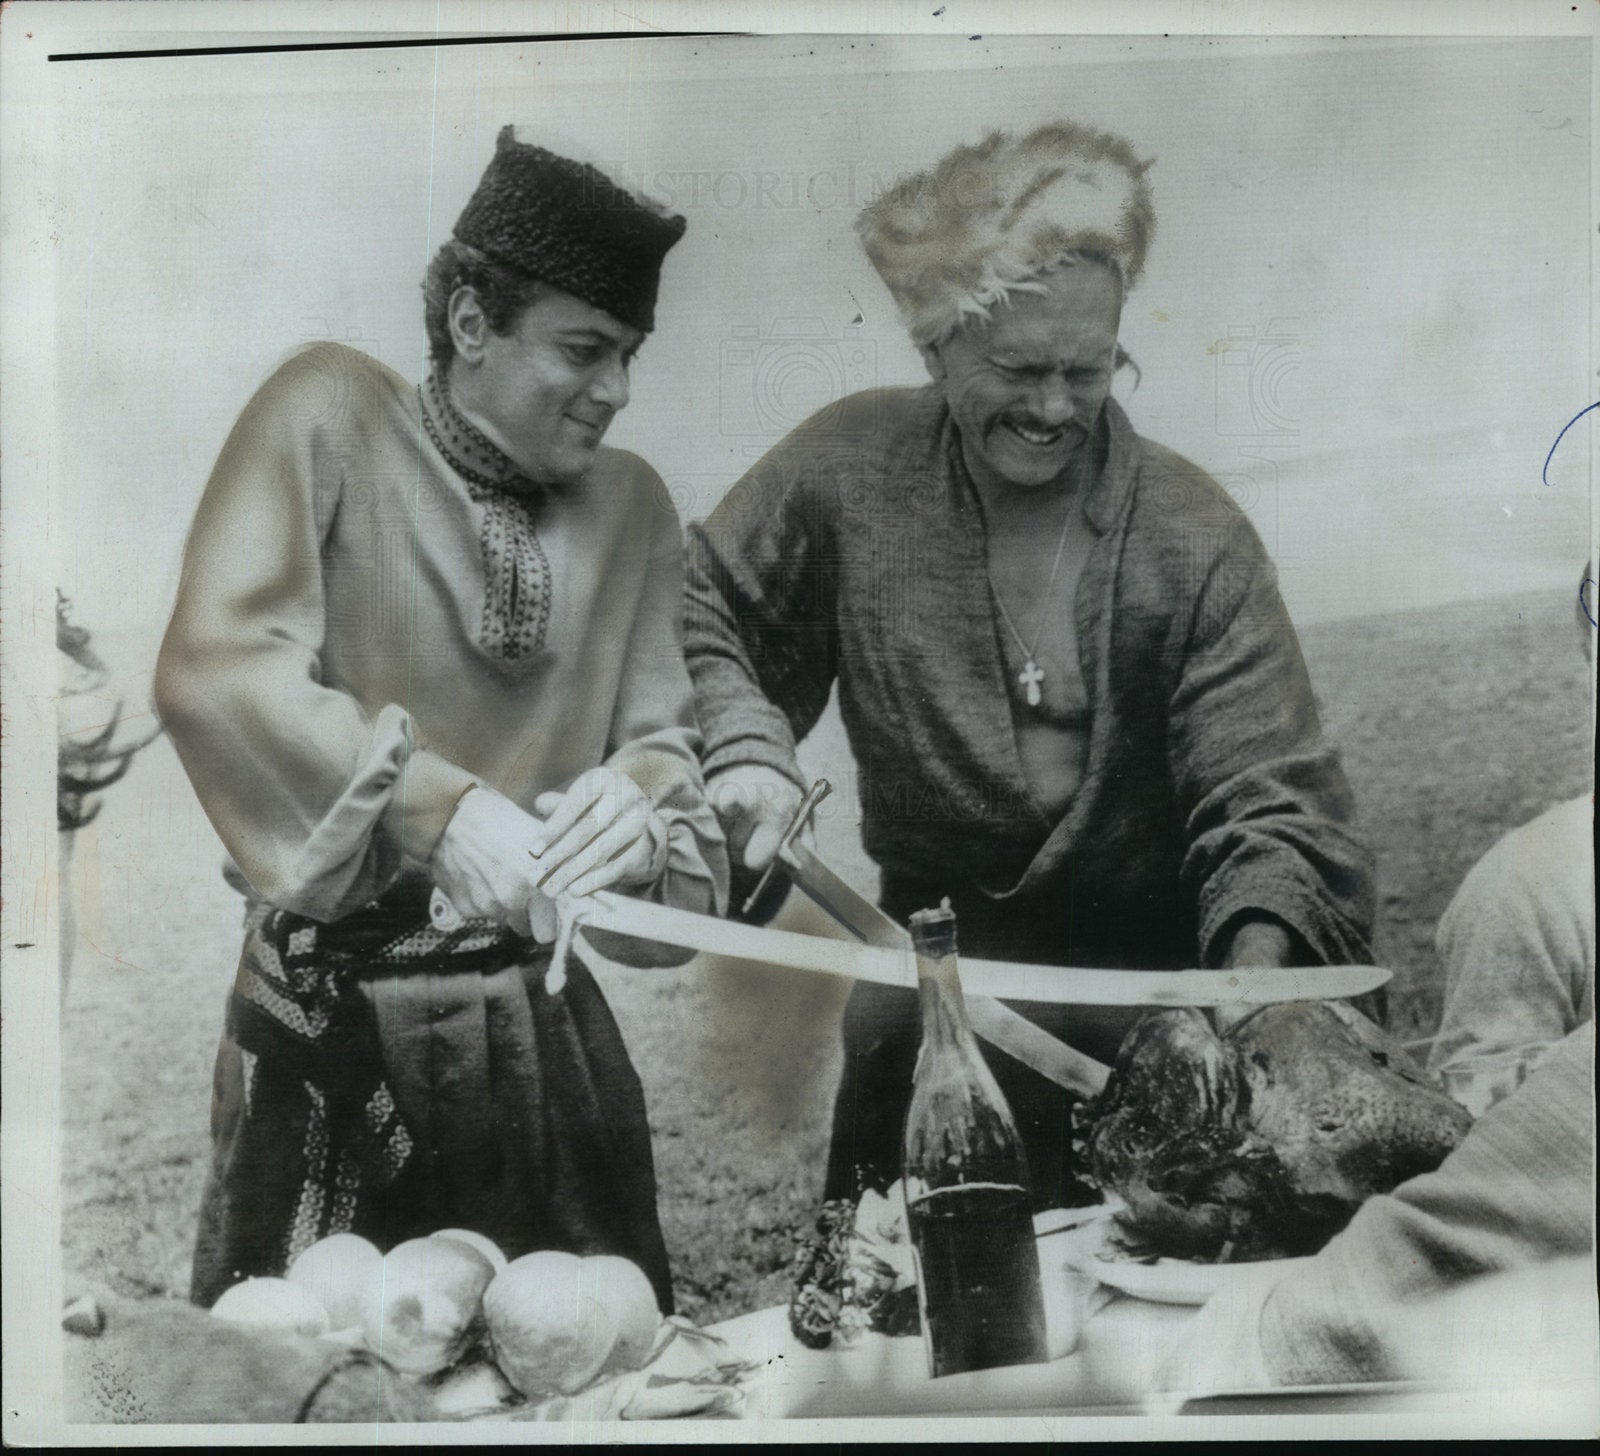 1961 Press Photo Tony Curtis & Yul Brynner in Taras Bulba - mjx00849-Historic Images